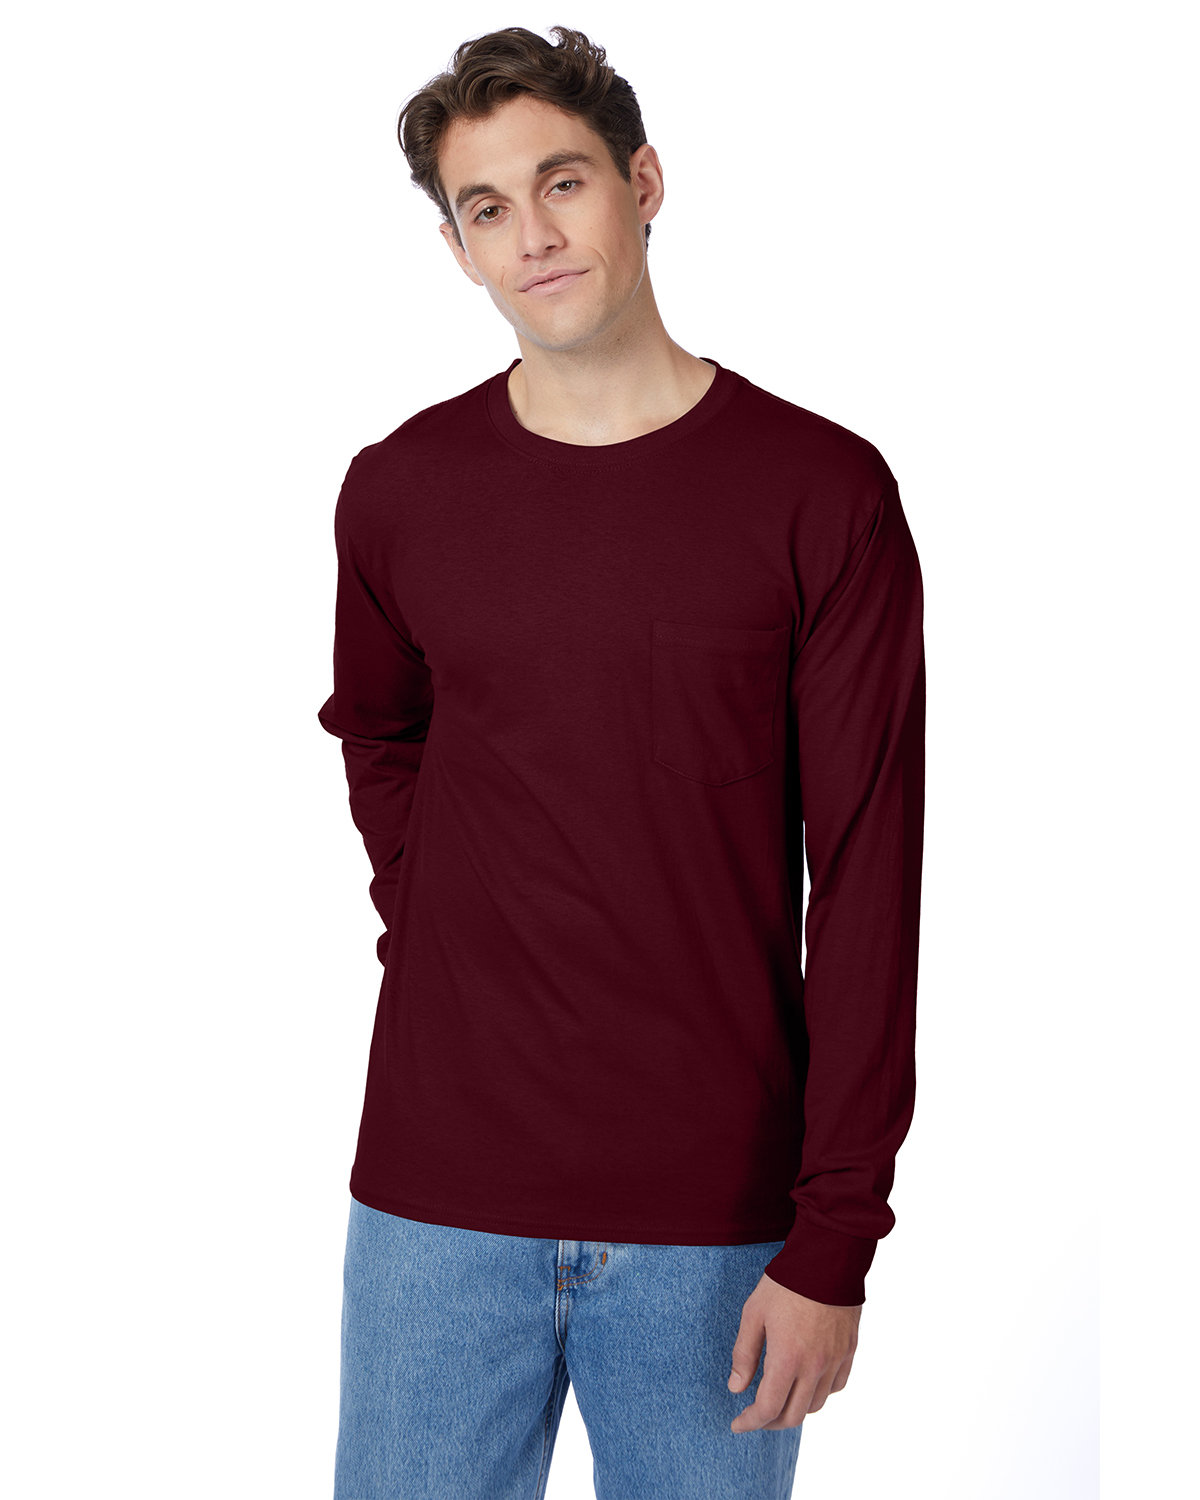 Hanes Men's Authentic-T Long-Sleeve Pocket T-Shirt MAROON 